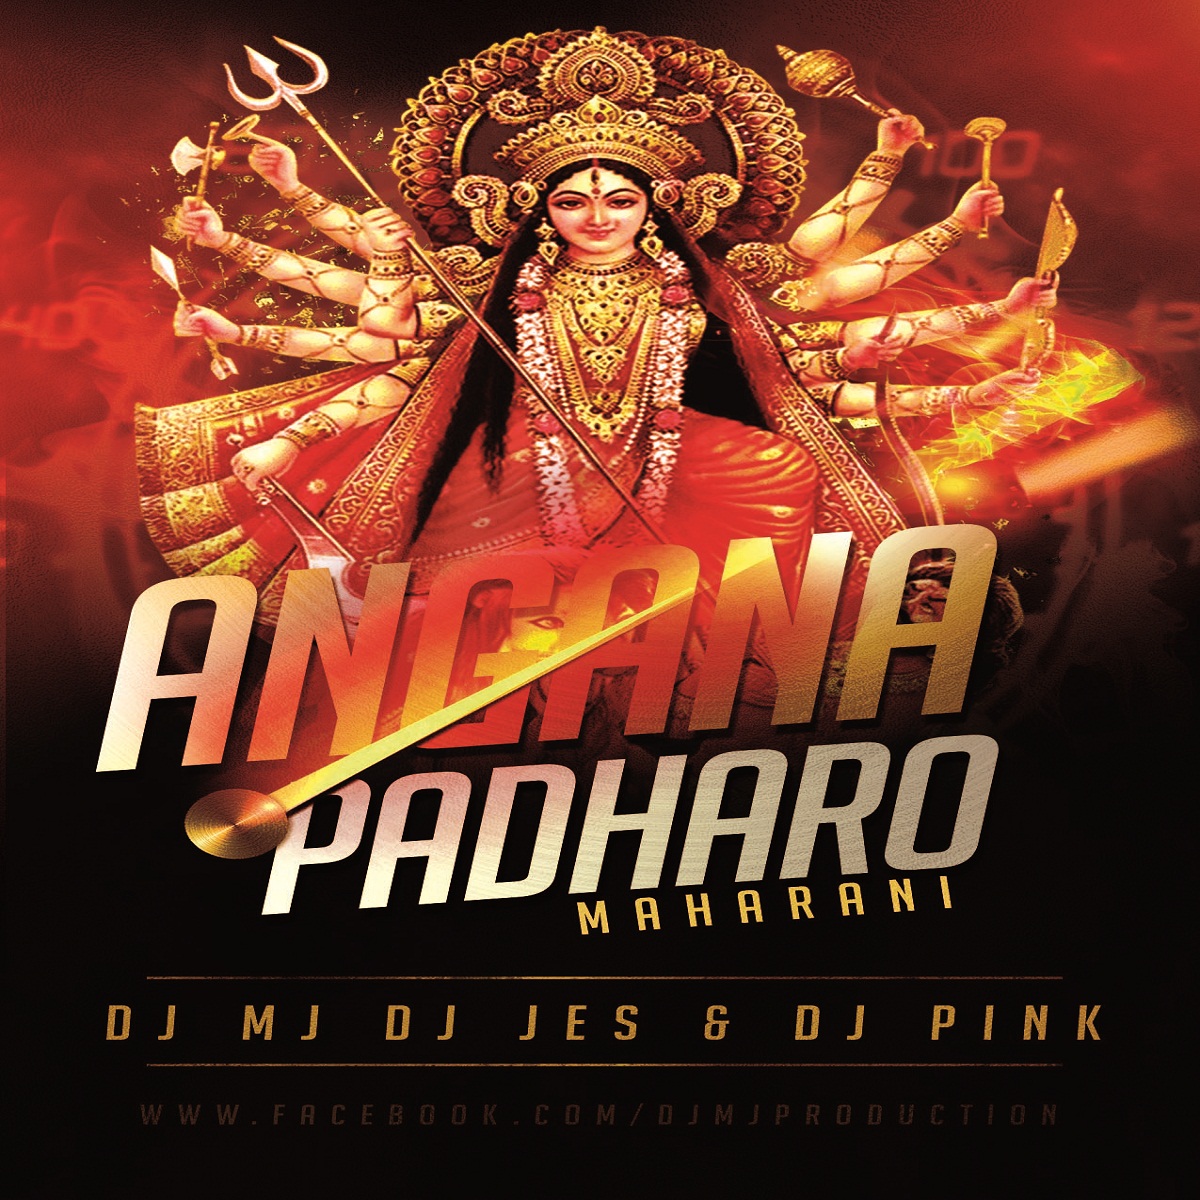 Angana Padharo Maharani Dj Mj Dj Jes & Dj Pink